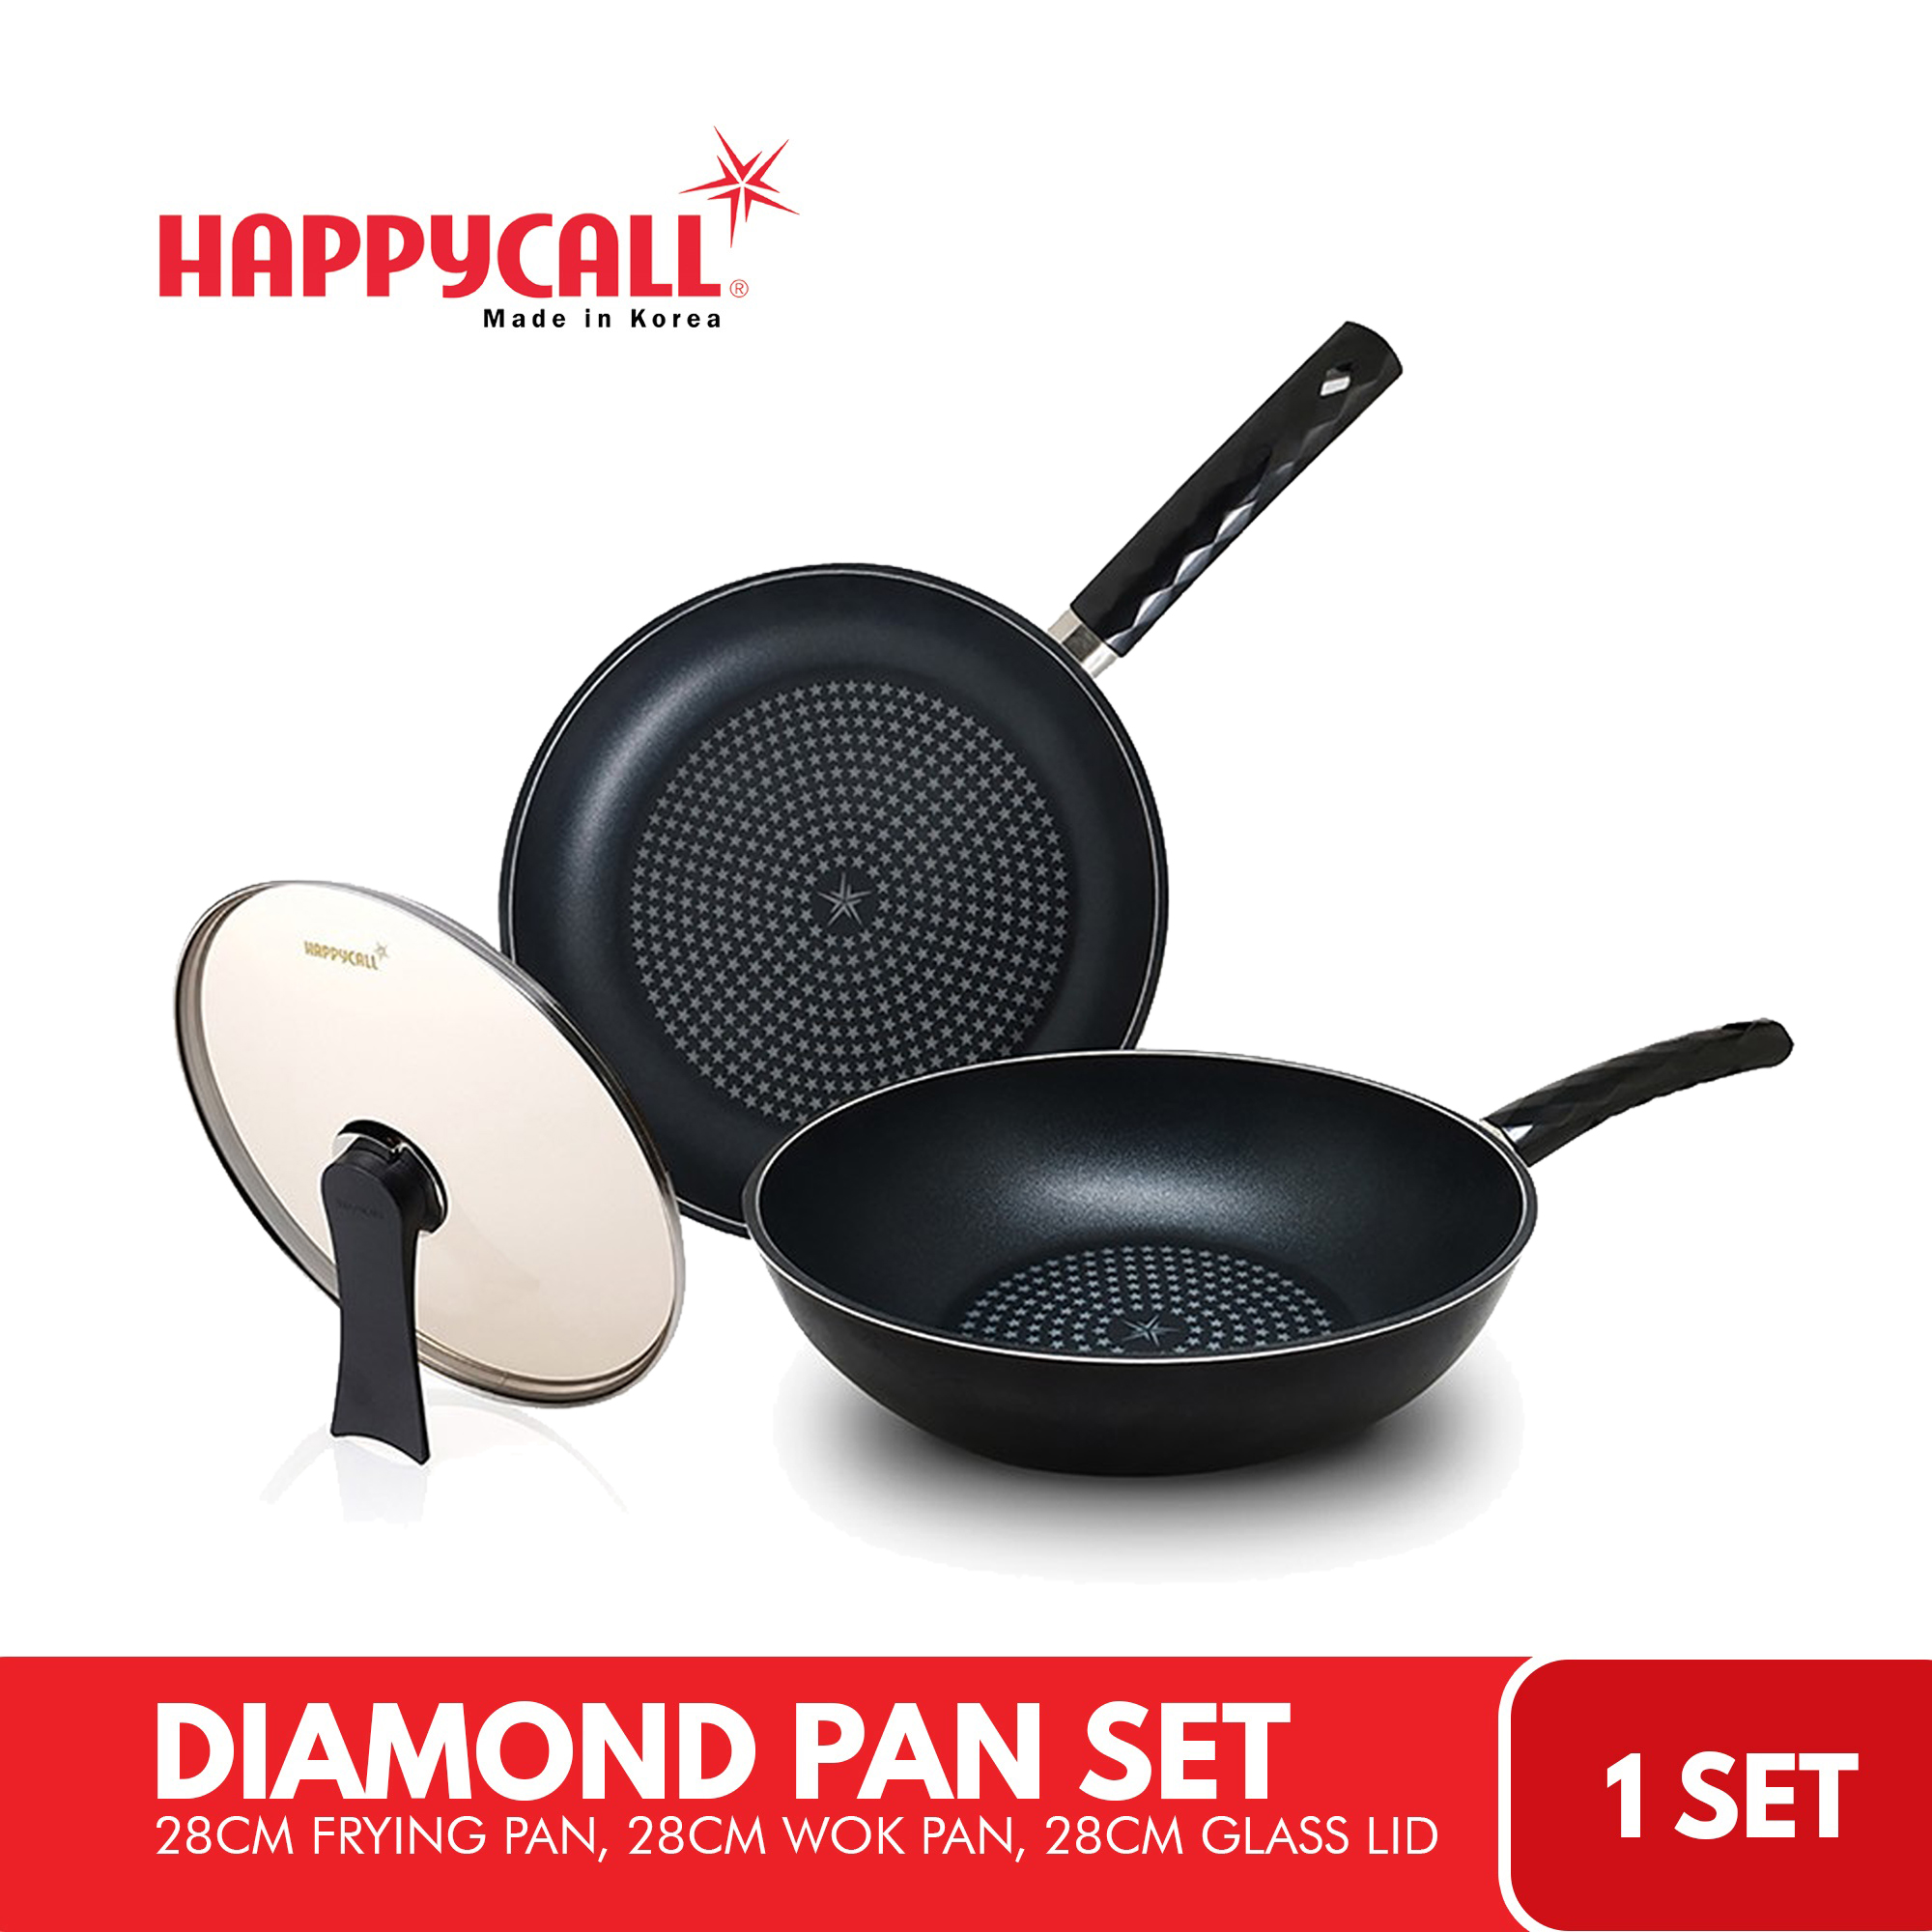 Happycall Diamond Pan Set, 3 Pcs (28cm Frying Pan + 28cm Wok Pan + 28cm  Glass Lid) Not Induction Ready